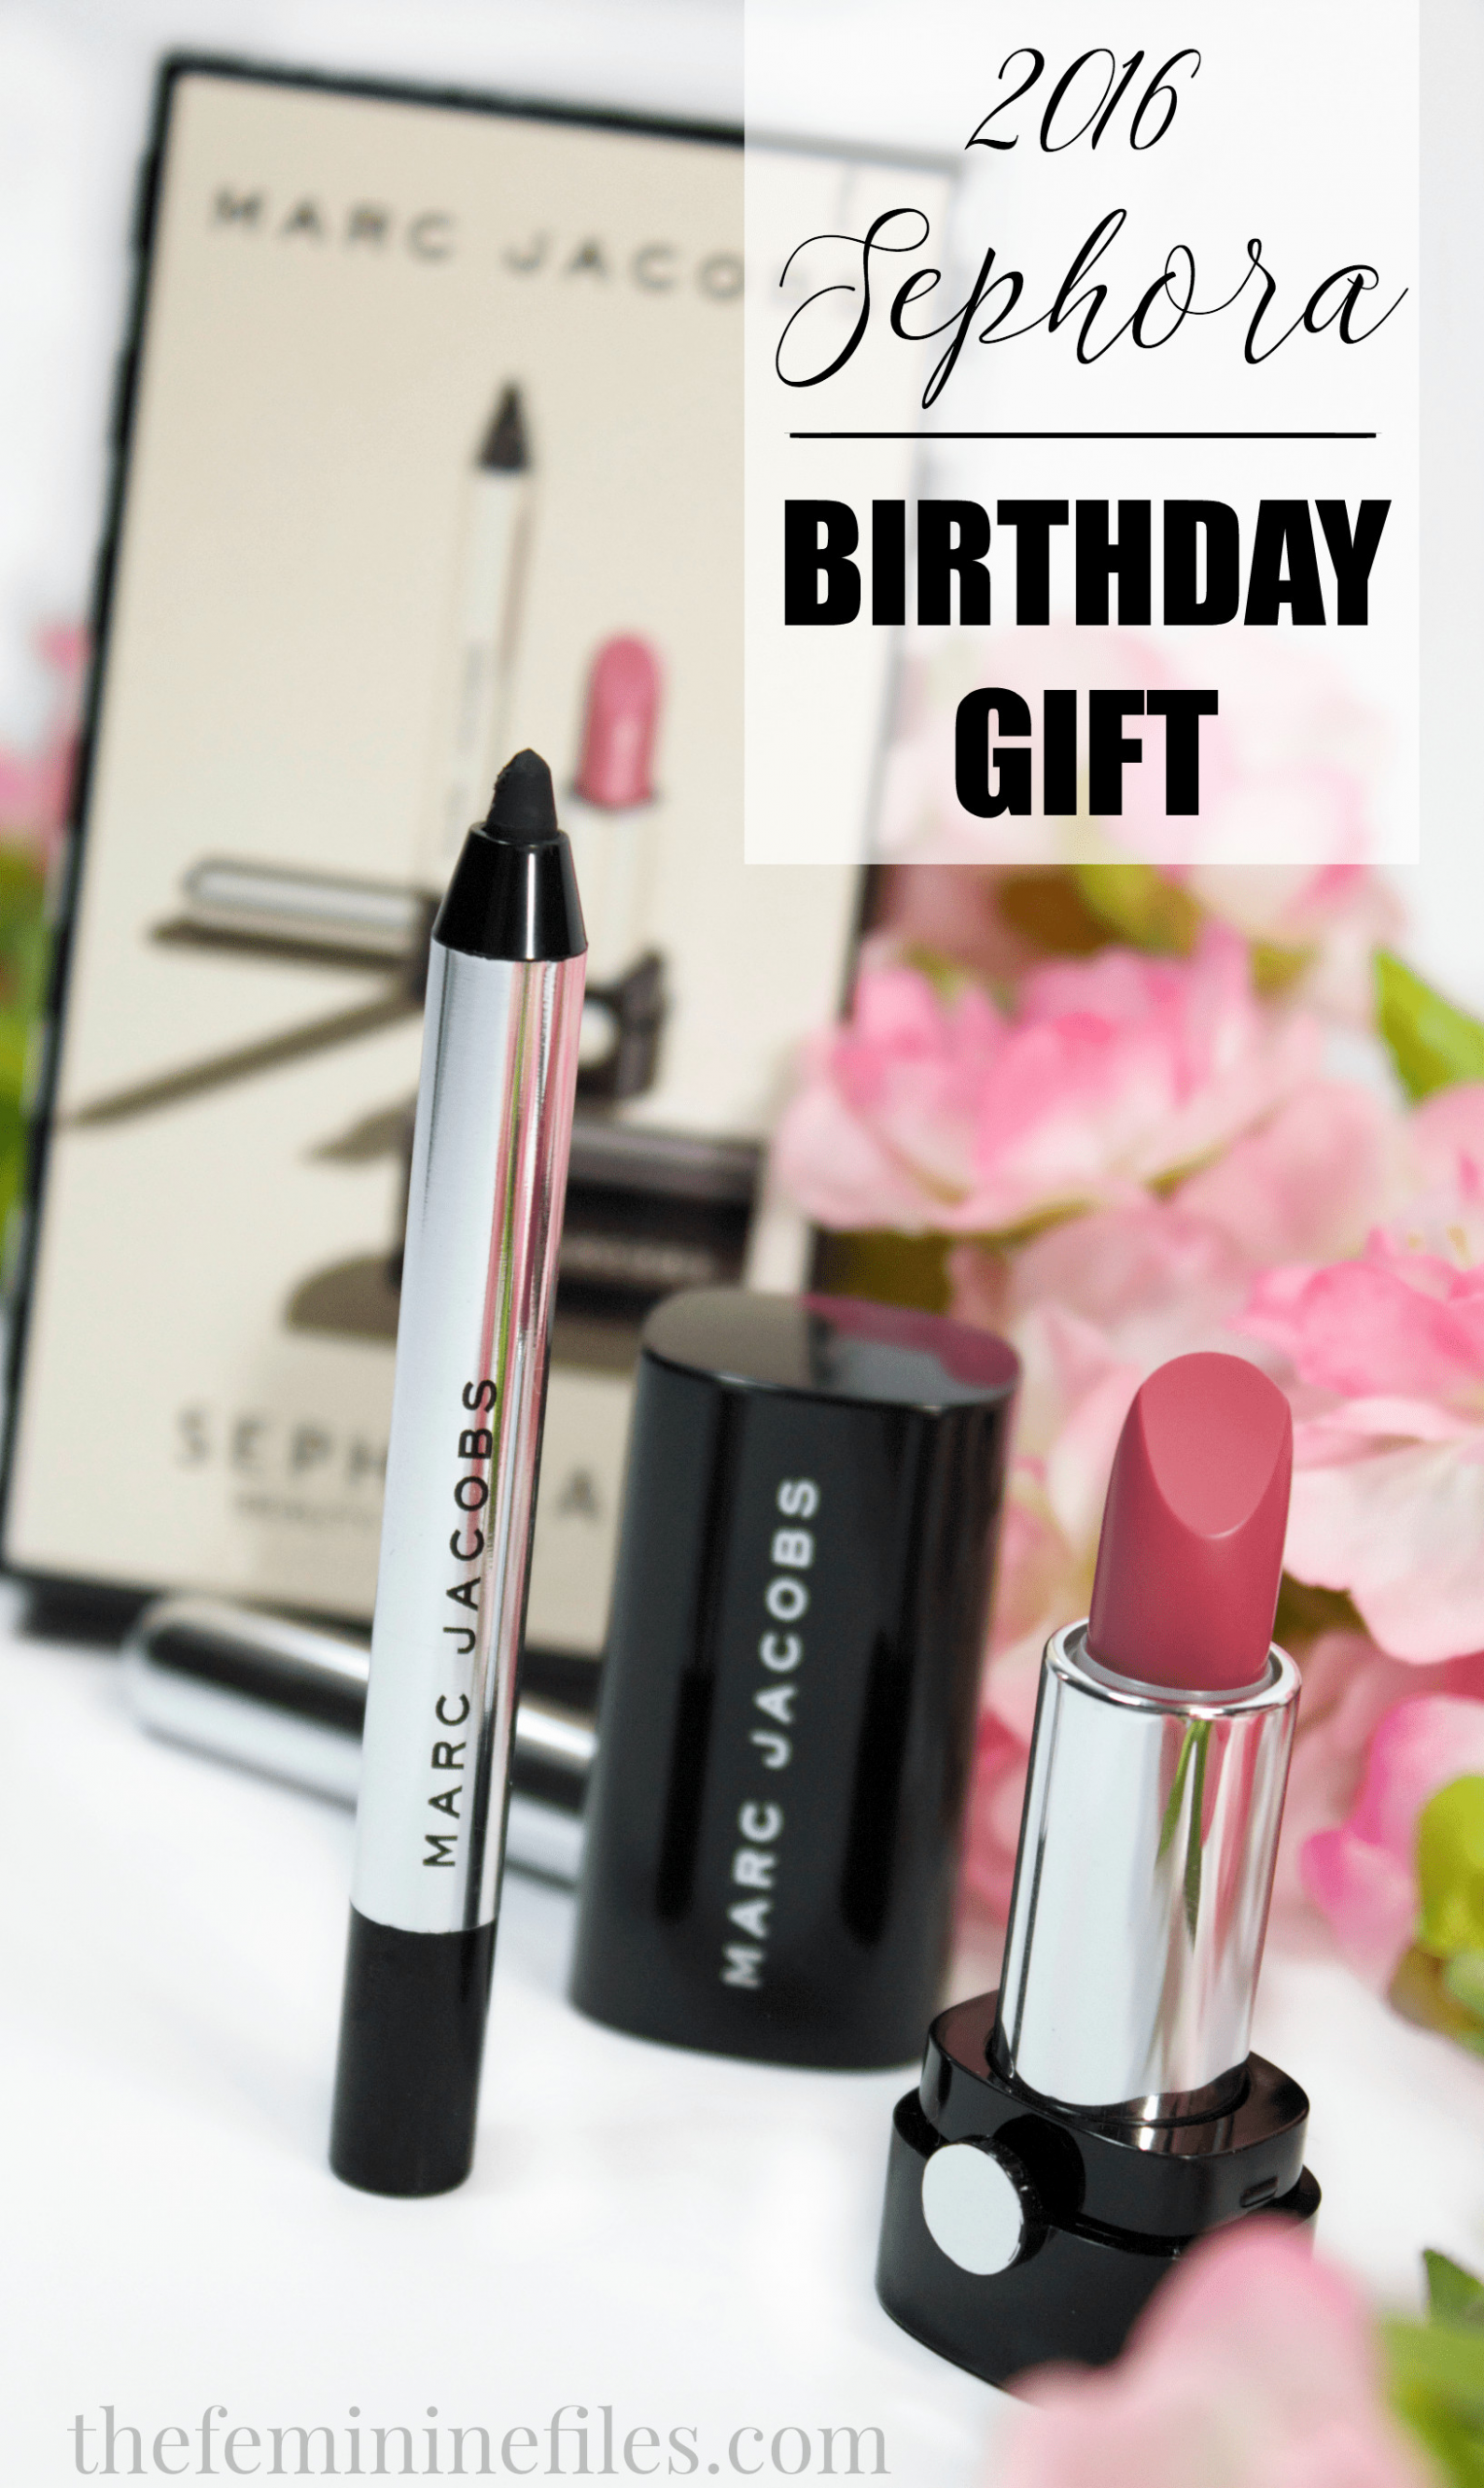 Sephora Birthday Gift Online
 2016 SEPHORA BIRTHDAY GIFT MARC JACOBS The Feminine Files